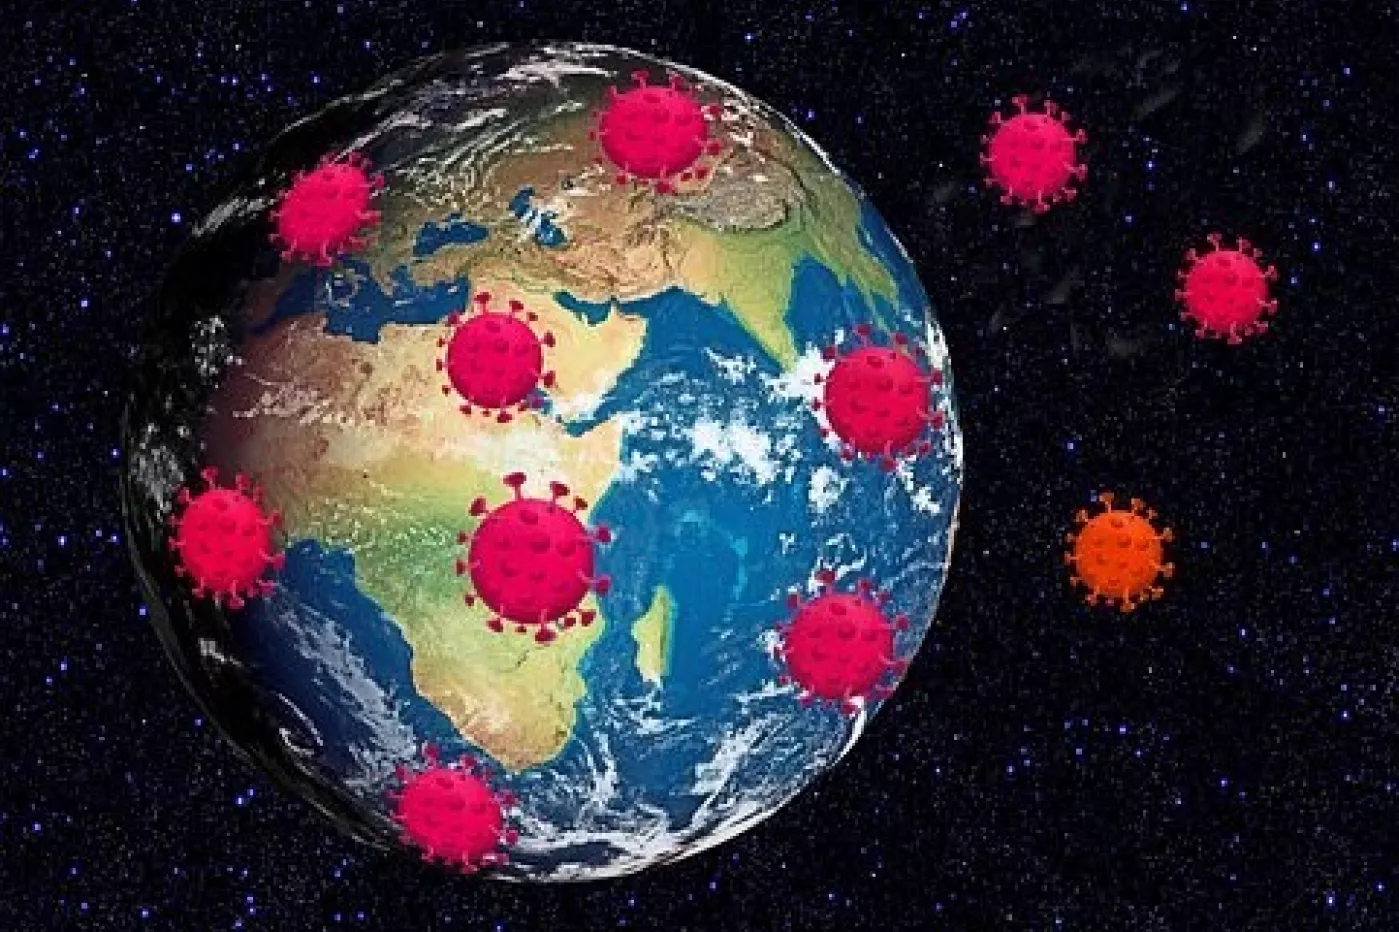 Virus rodeando el planeta